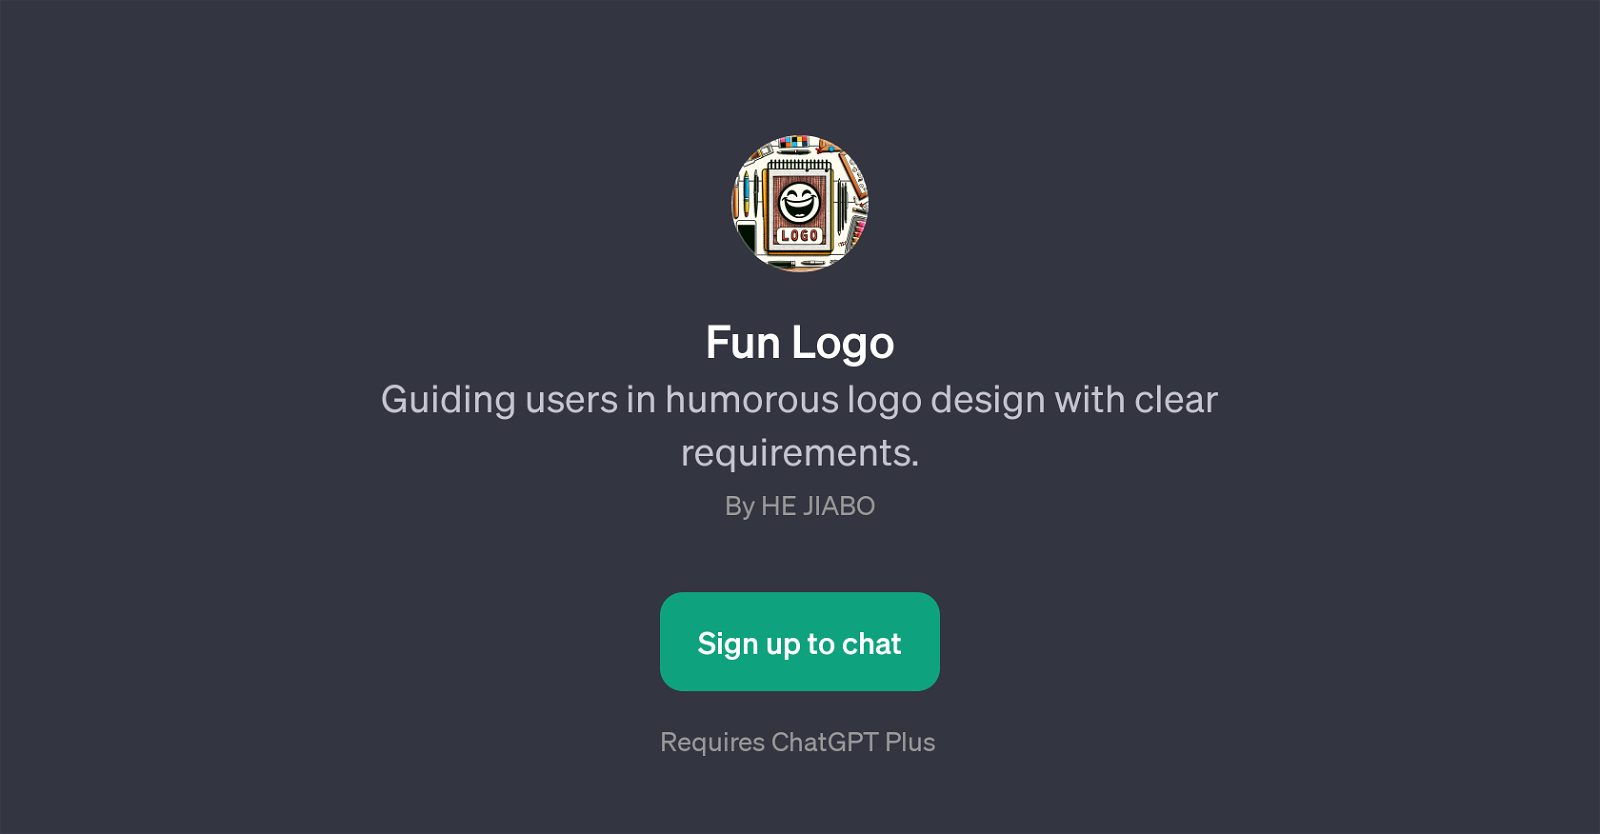 Fun Logo website